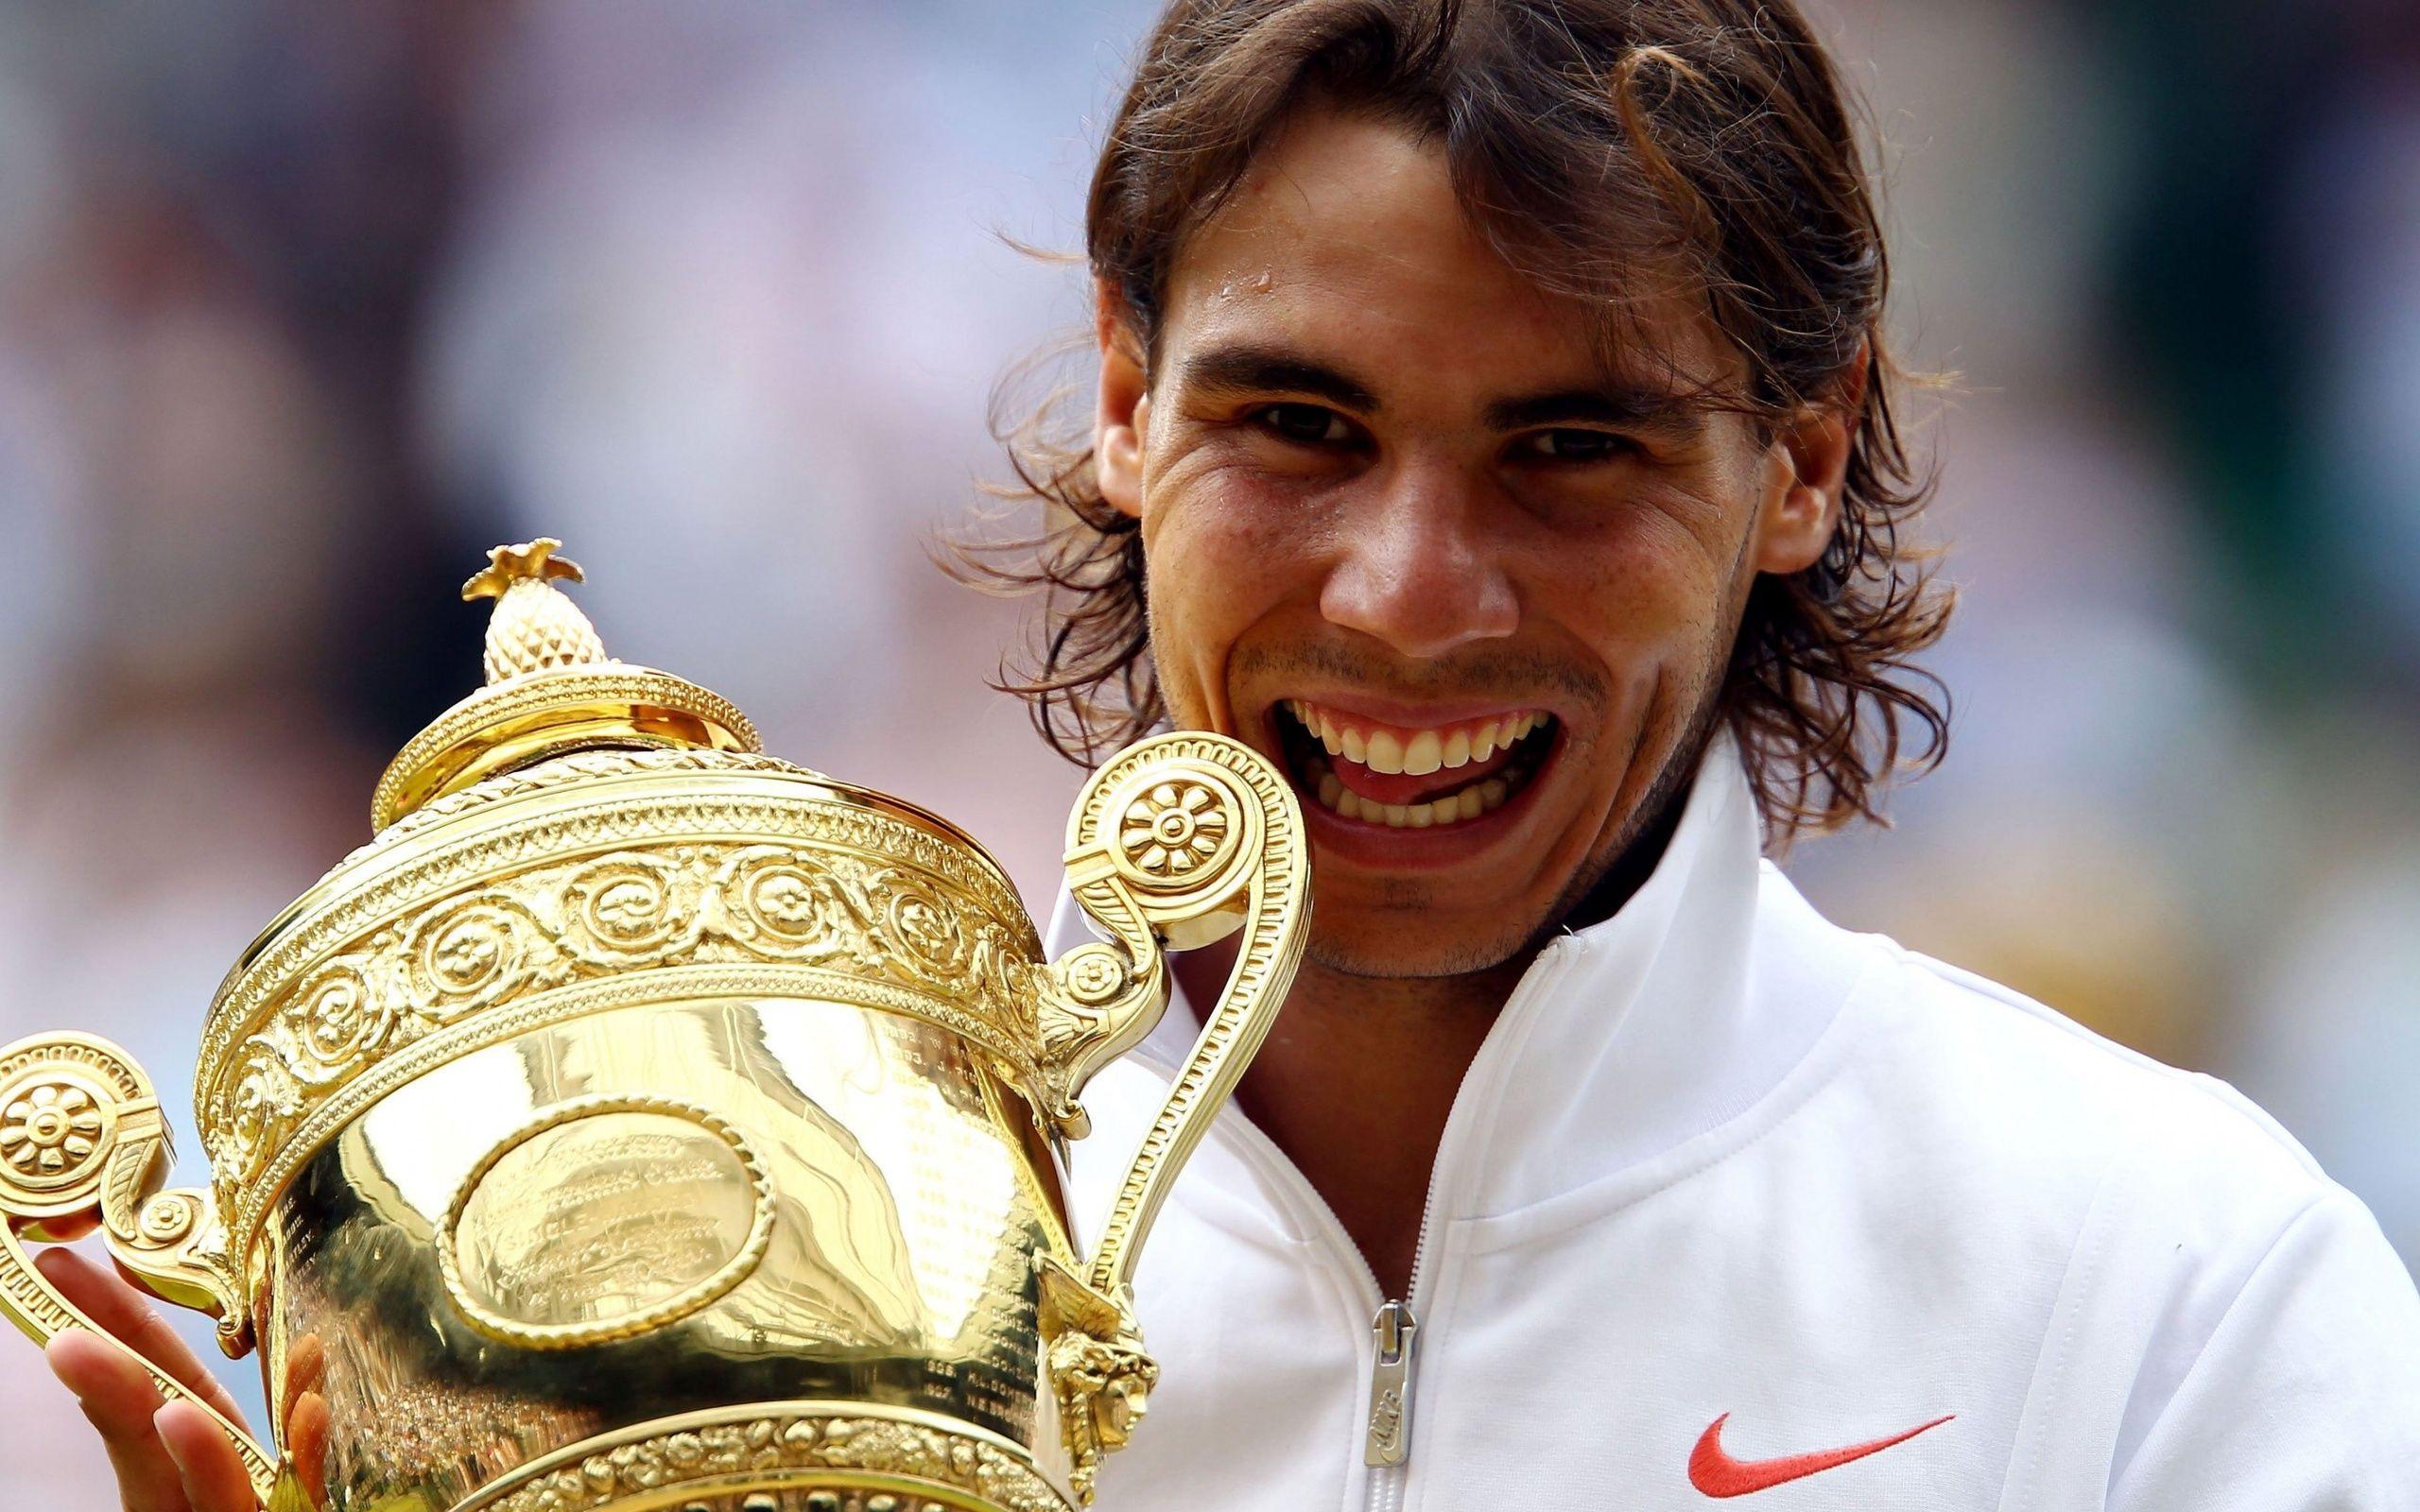 Happy Rafael Nadal Wallpaper Background 60060 2560x1600 px